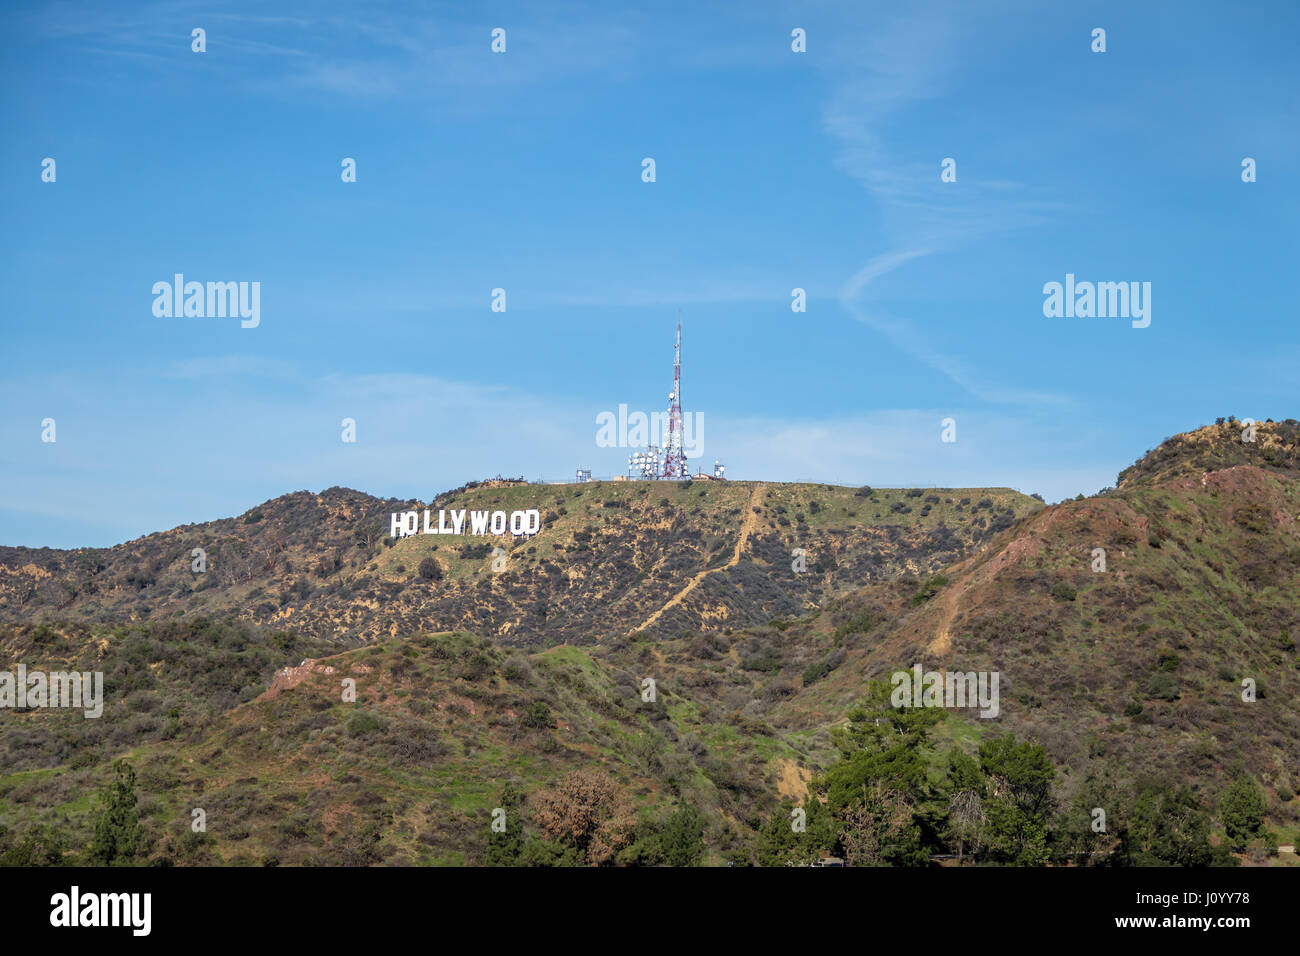 Hollywood-Schild - Los Angeles, Kalifornien, USA Stockfoto